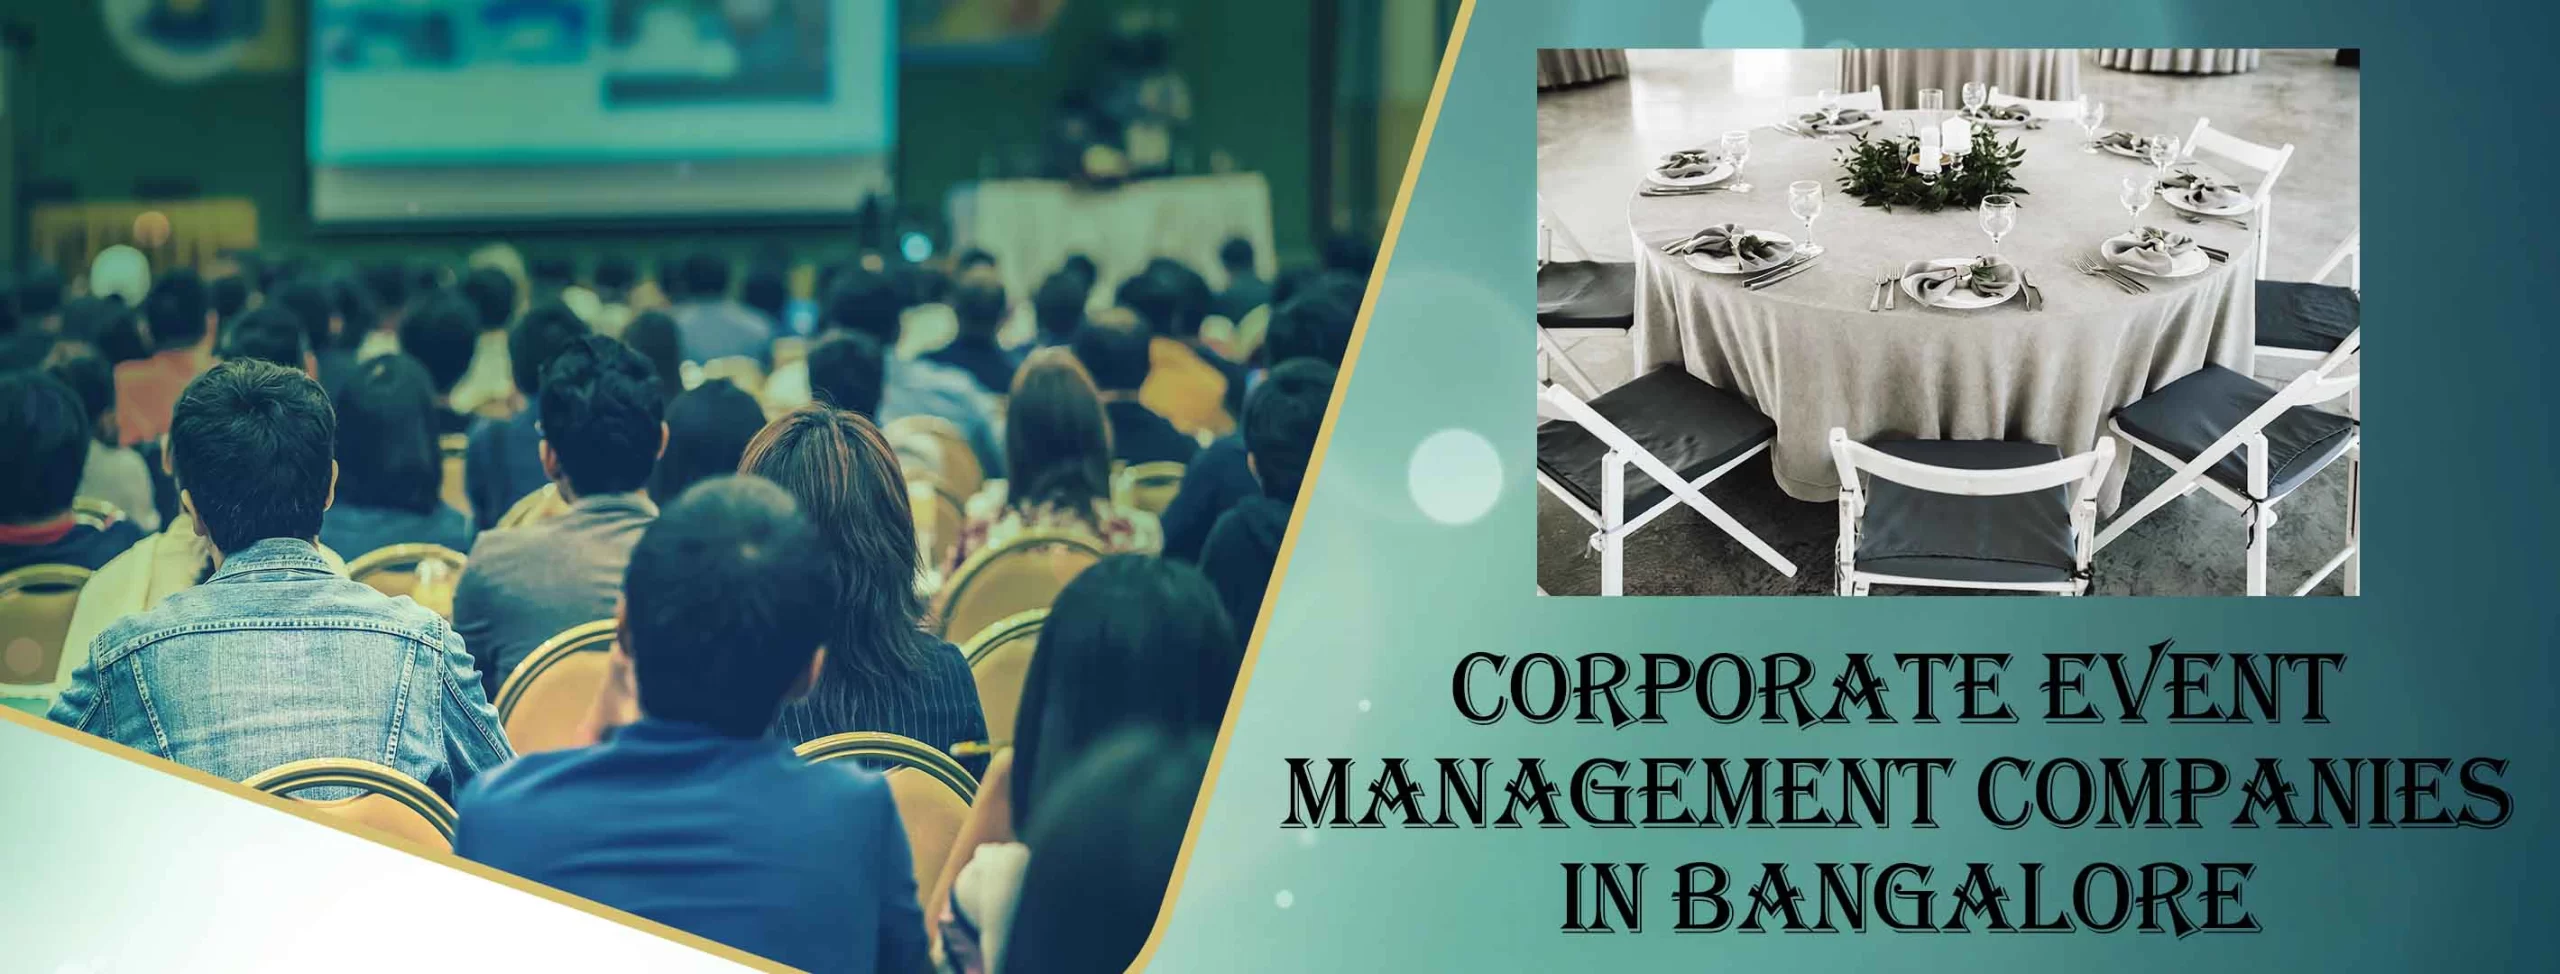 Corporate Event Management Companies in Bangalore